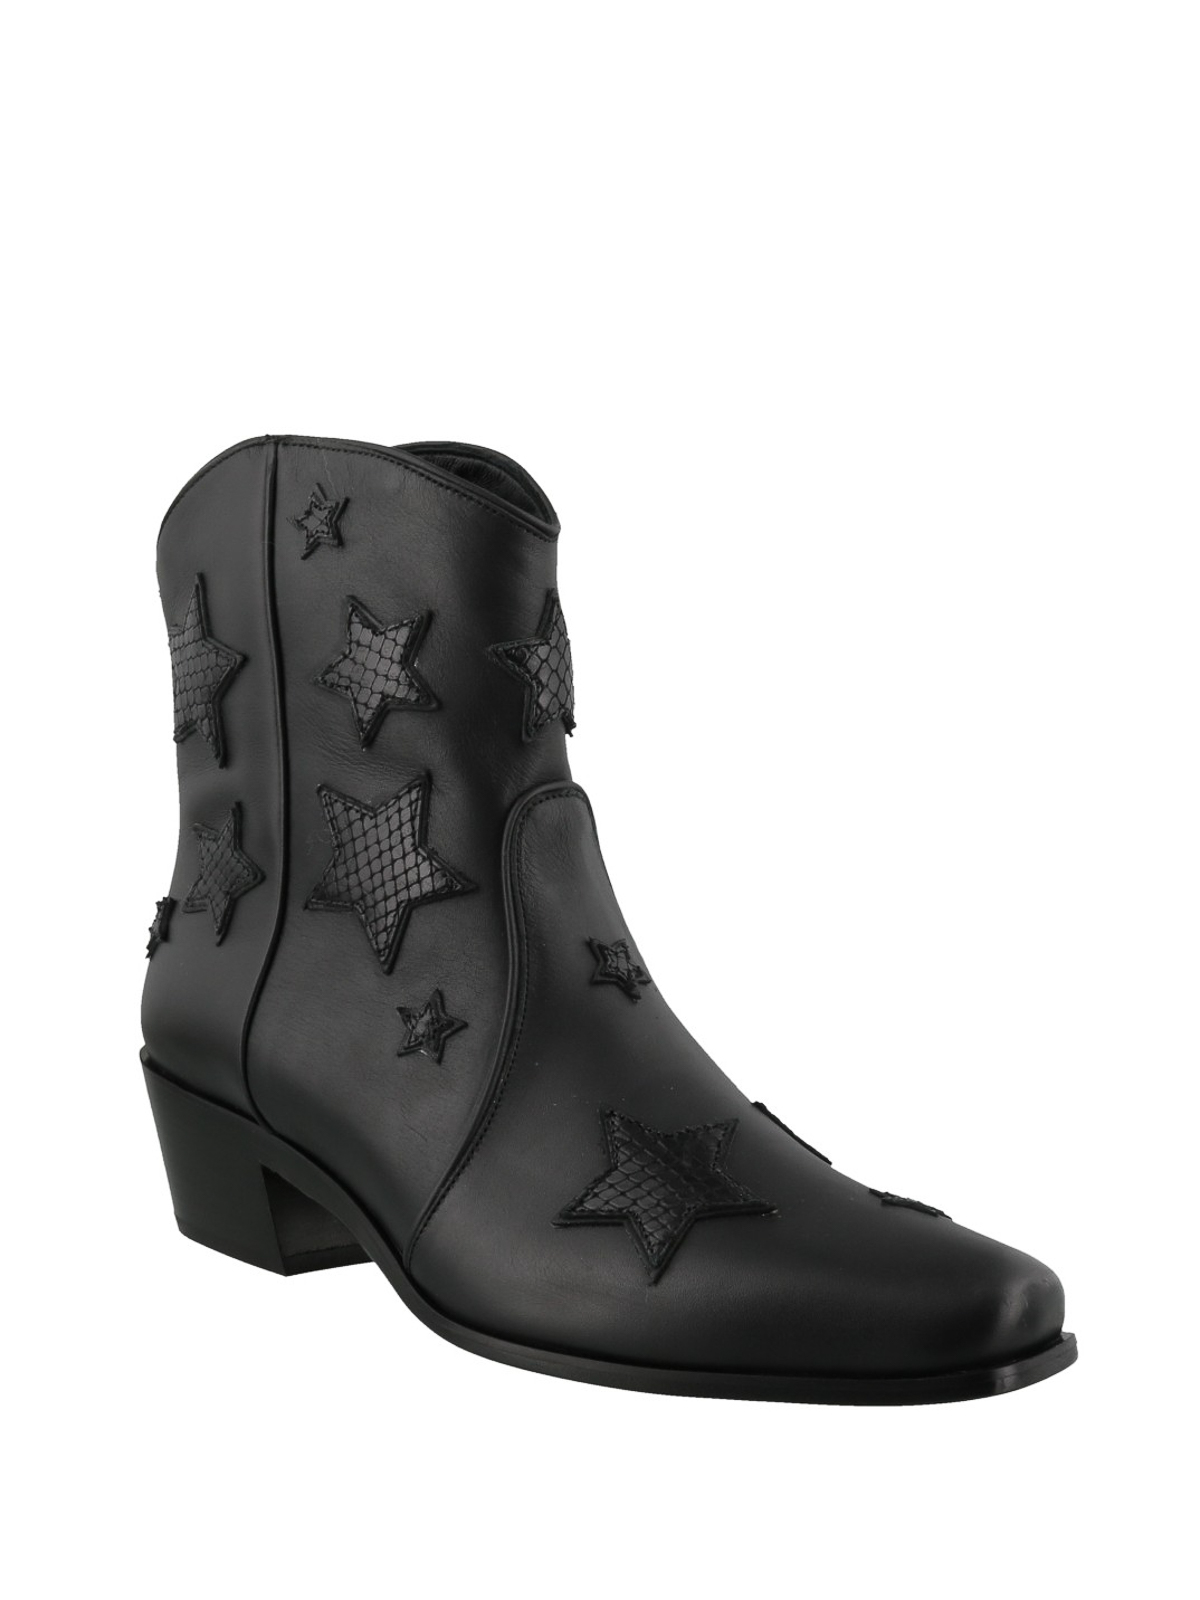 Miu Miu - Black leather cowgirl boots 